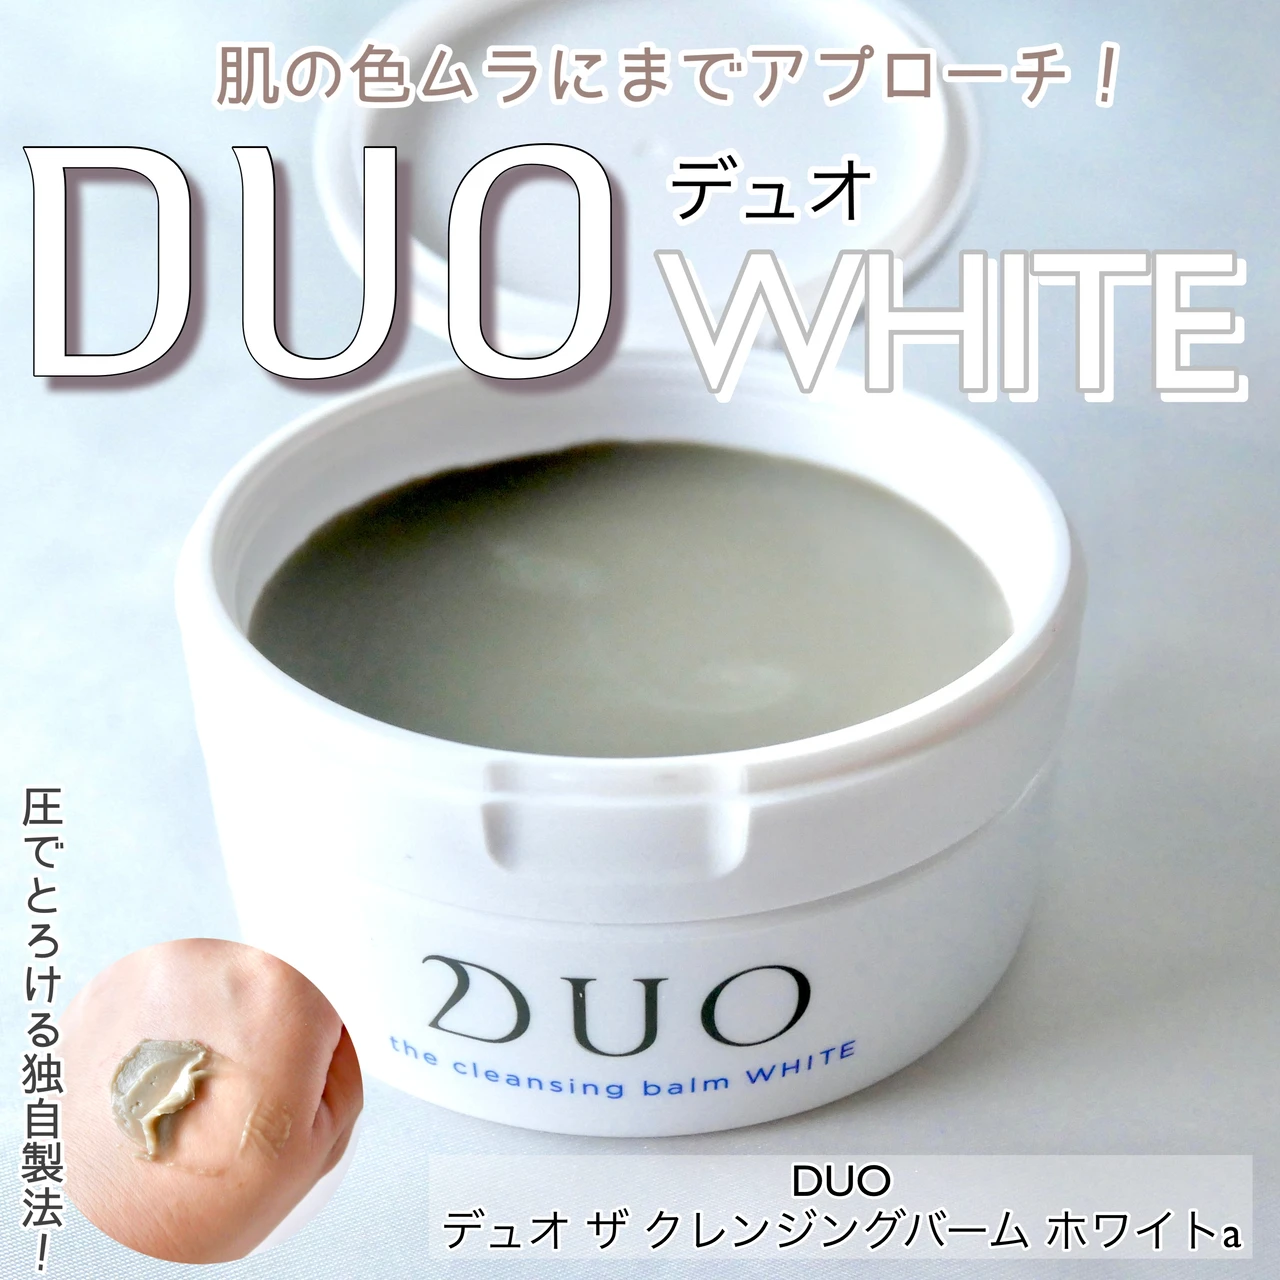 DUO ザクレンジングバーム ホワイトa 基礎化粧品